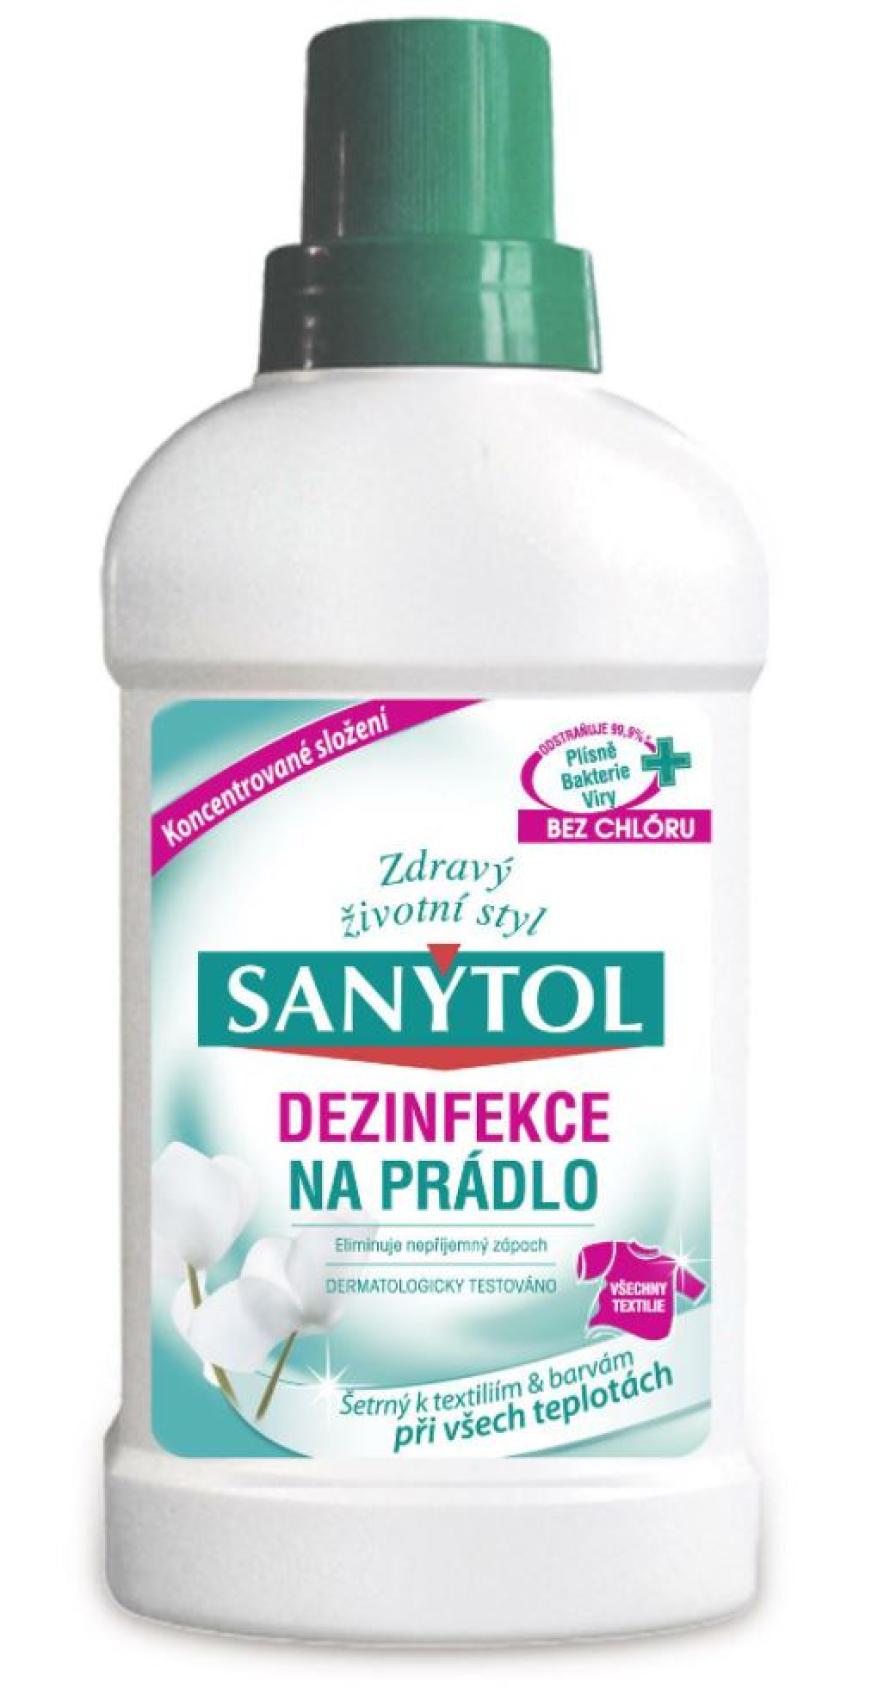 Sanytol dezinfekce na prdlo 500ml